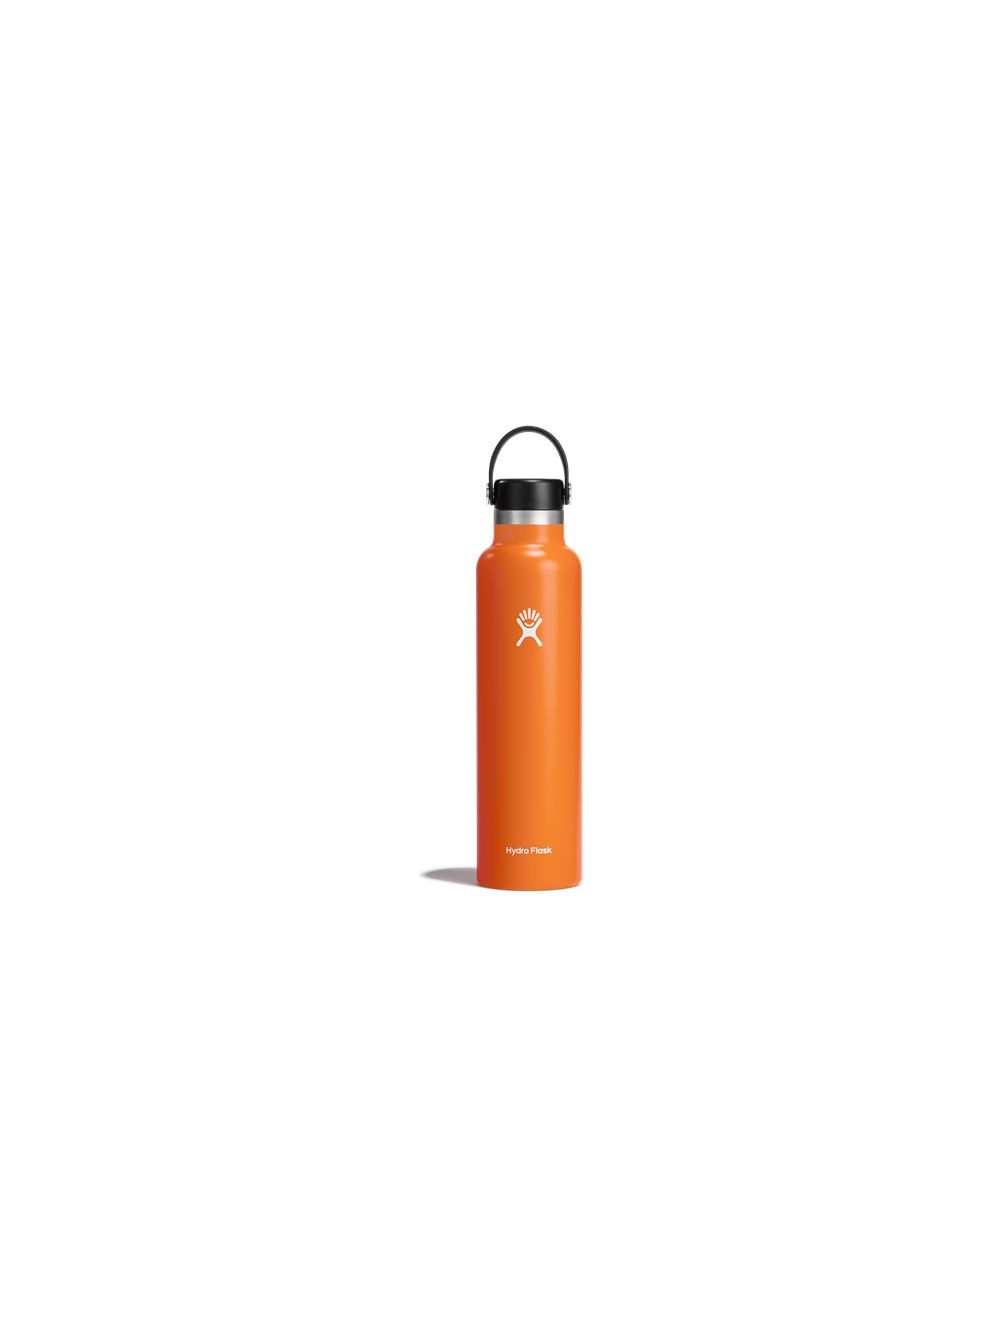 Standard Mouth Insulated Water Bottle w/ Flex Cap